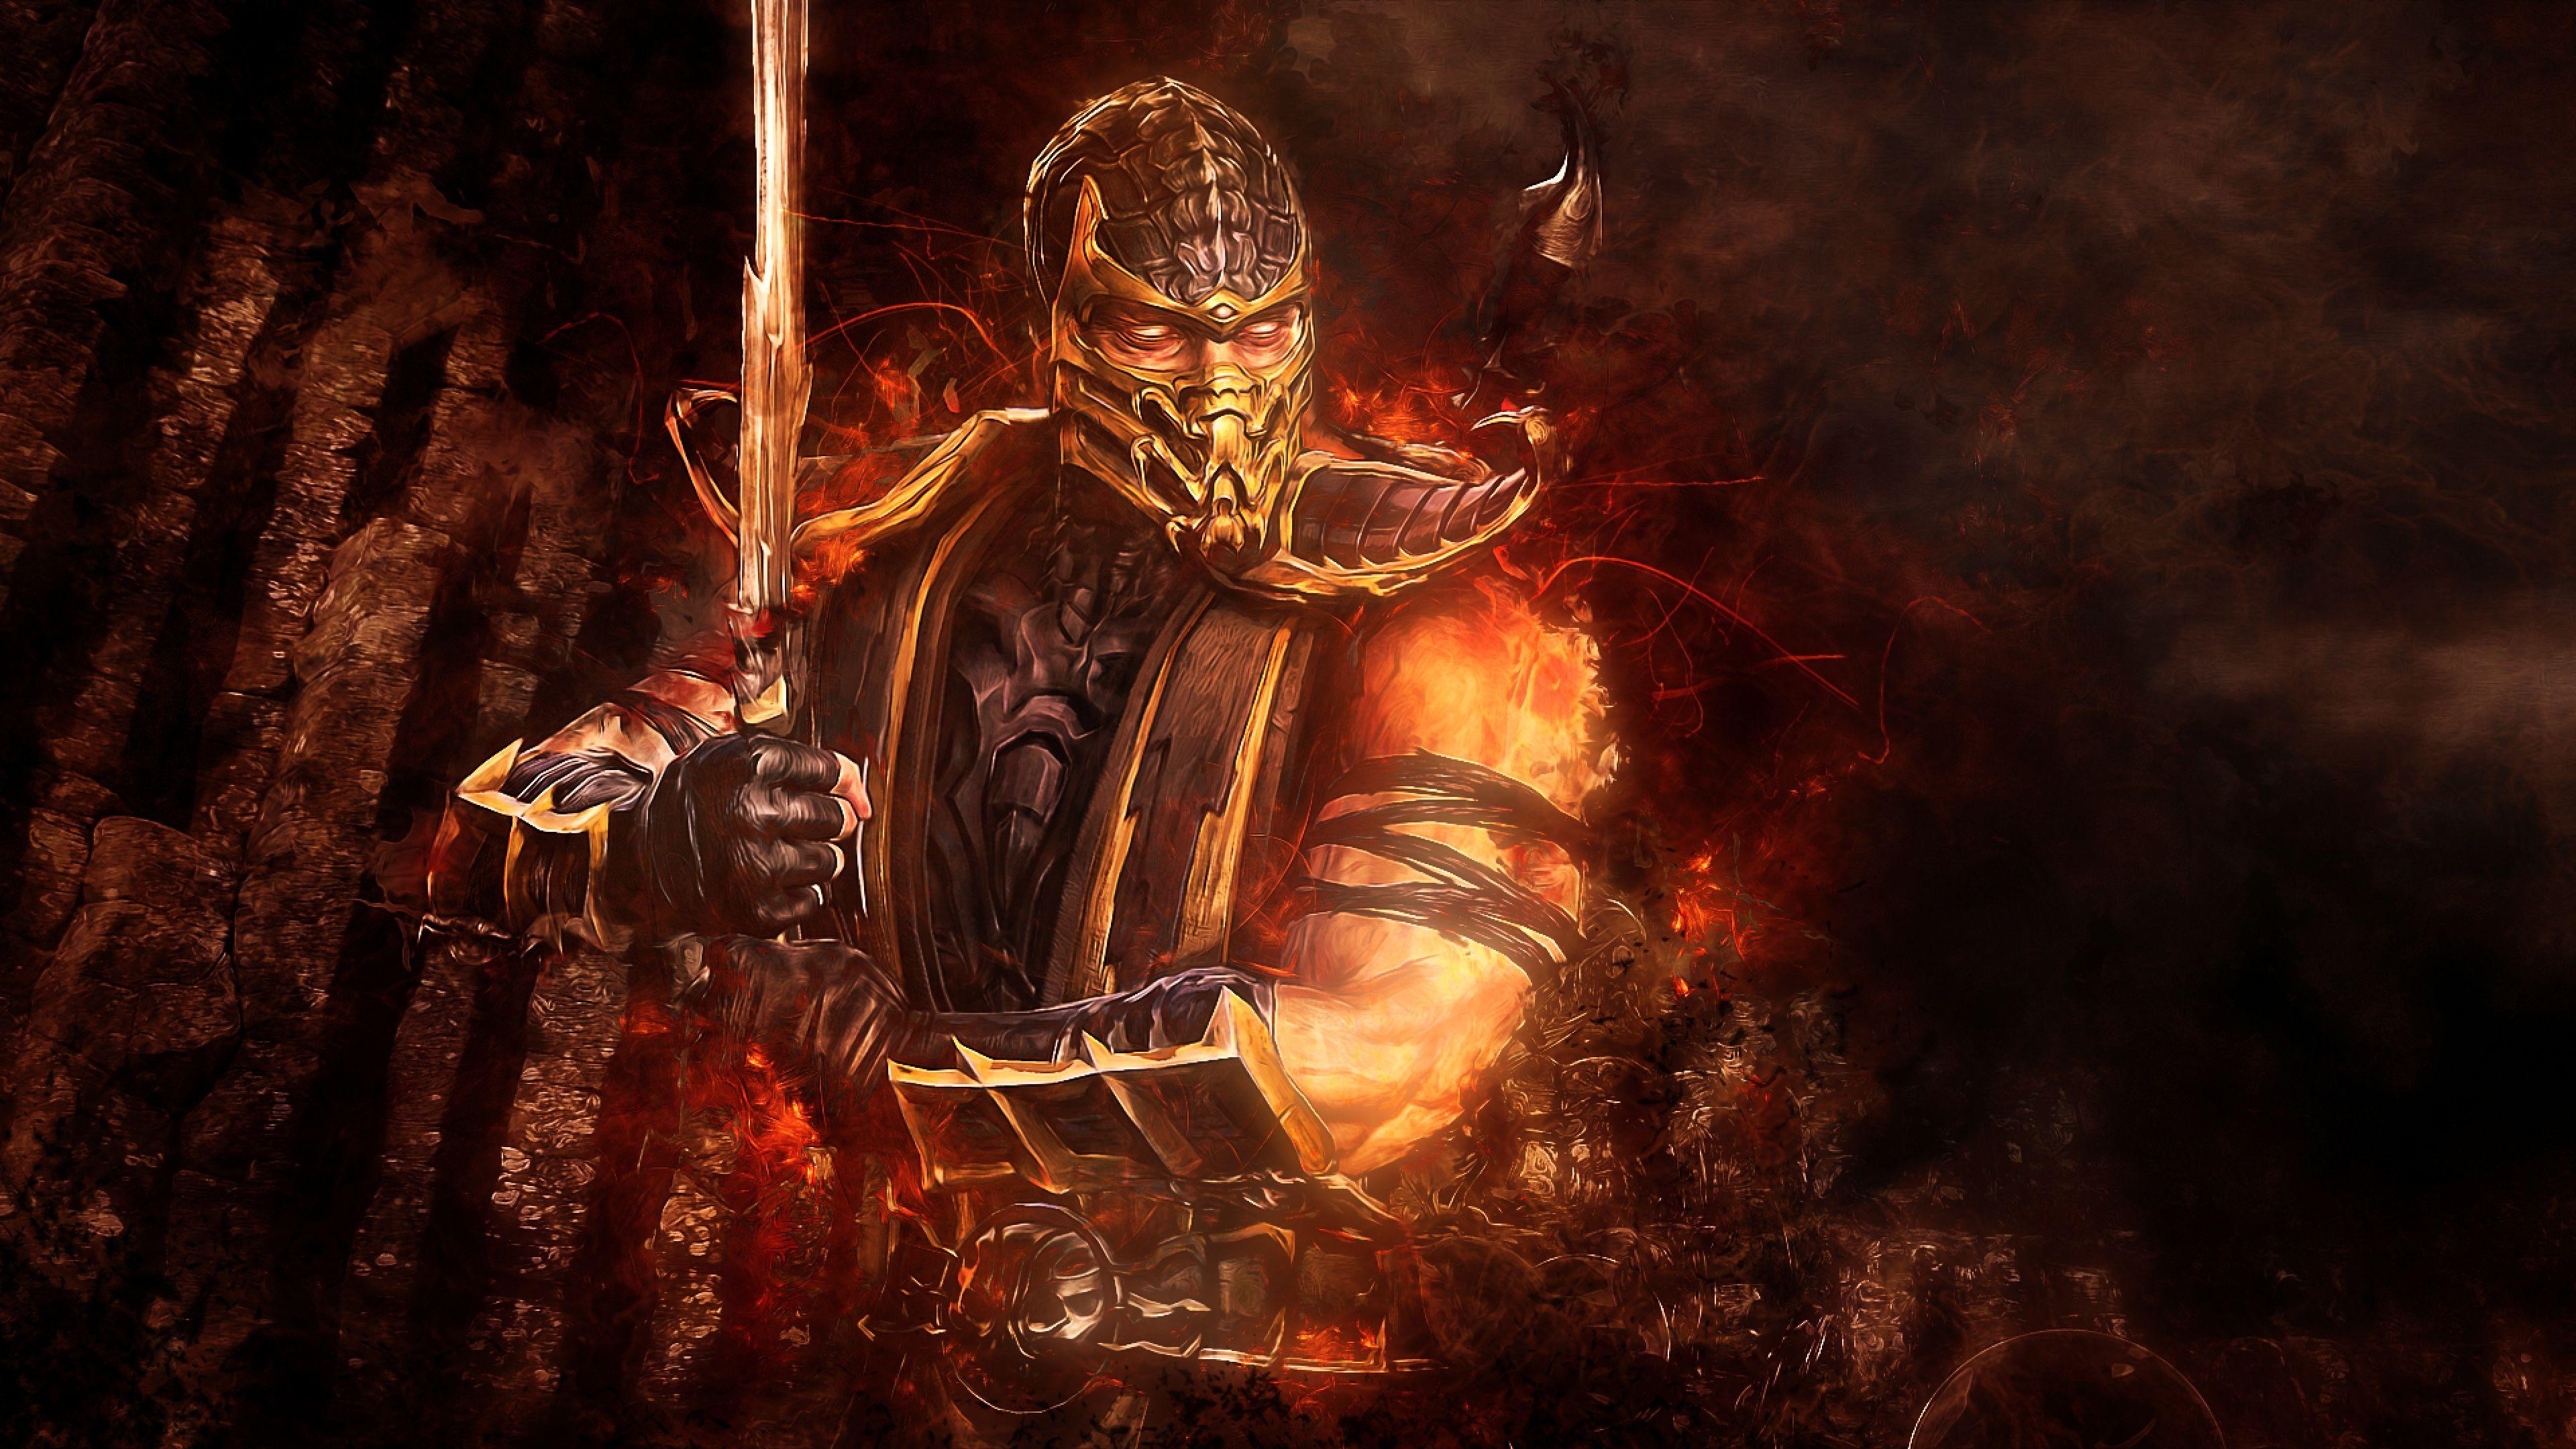 Mortal Kombat Scorpion, HD Games, 4k Wallpaper, Image, Background